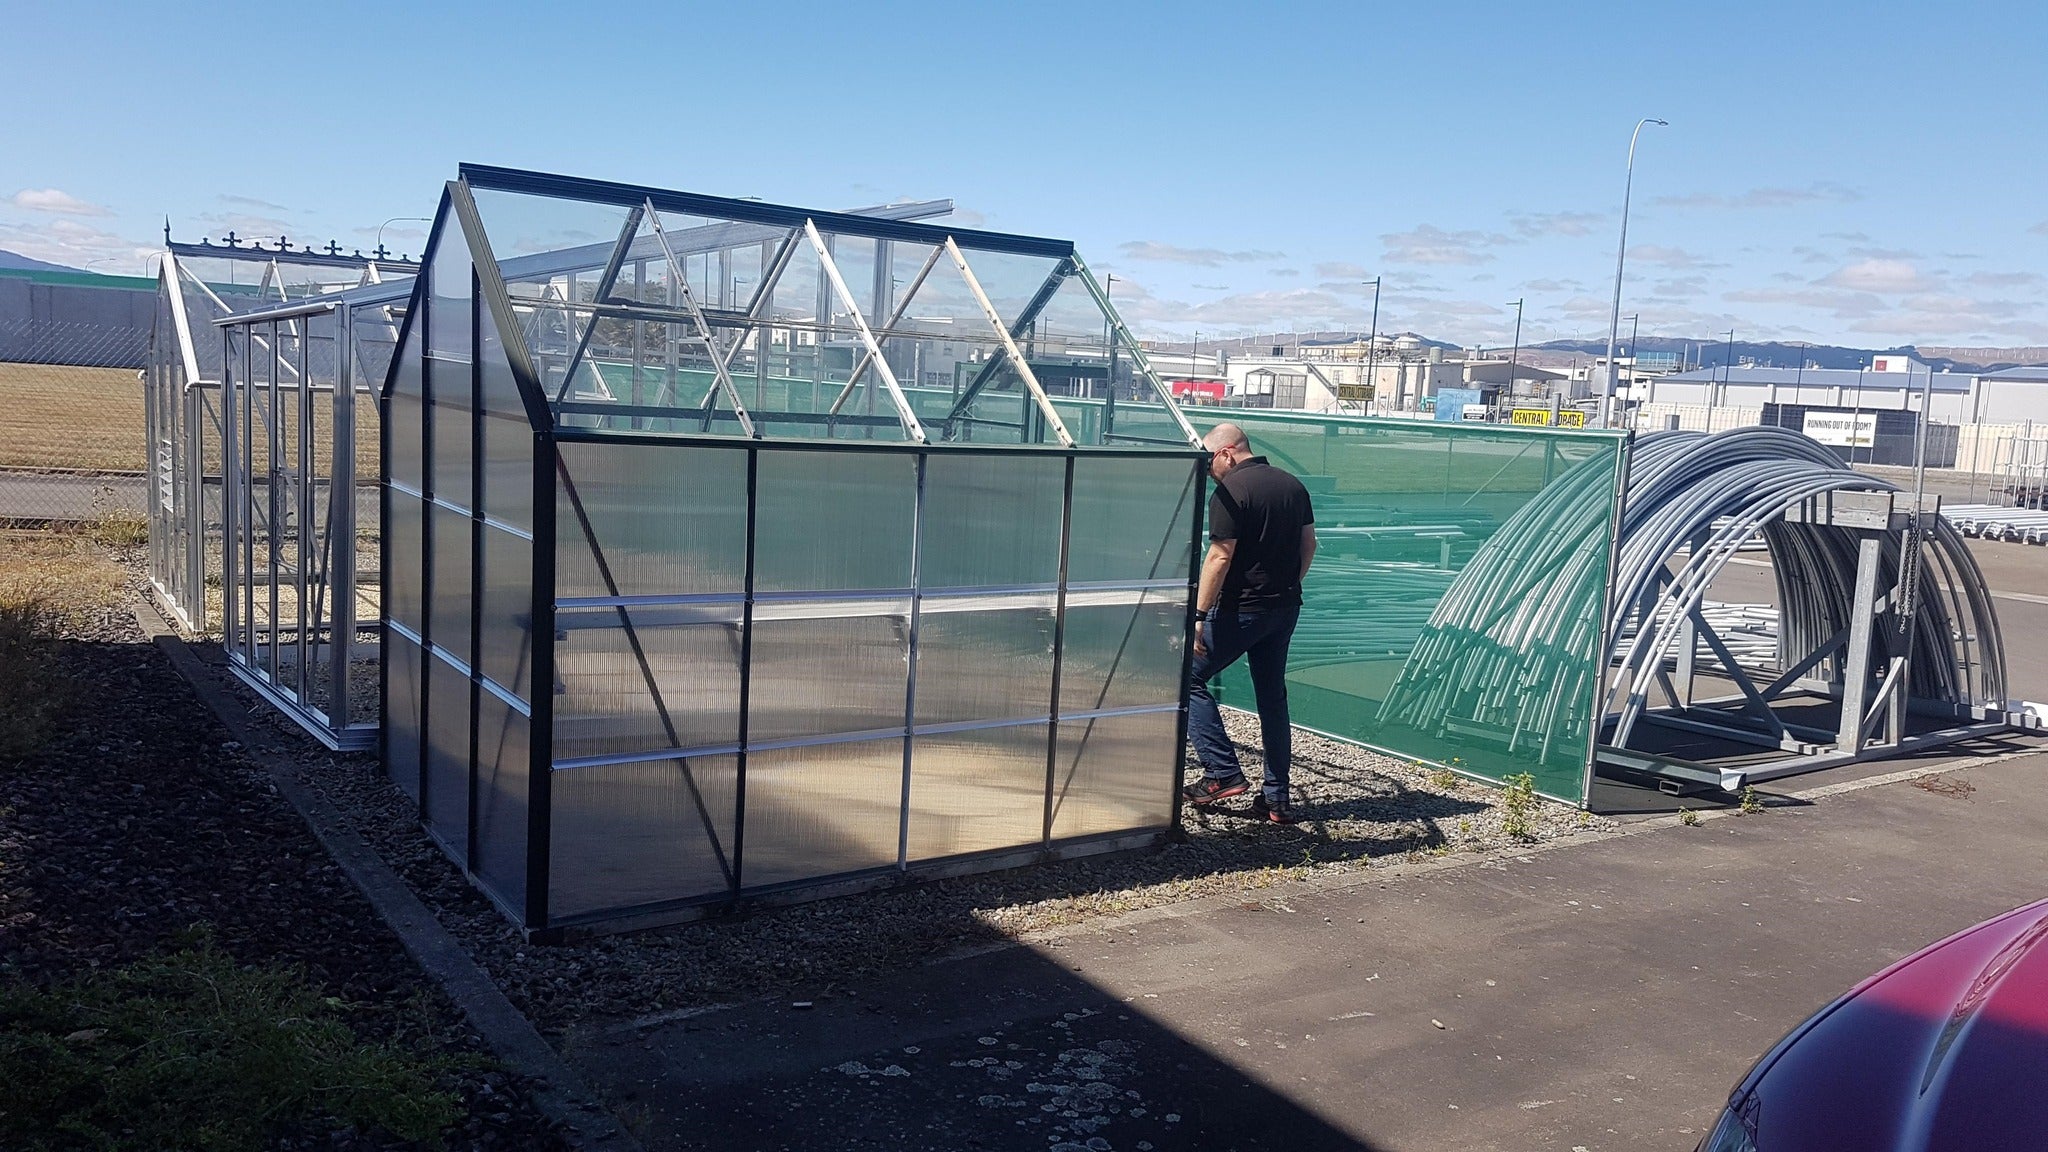 Backyard Beast 3.2m x 6.3m Poly-Glass Greenhouse - Aluminium Framed